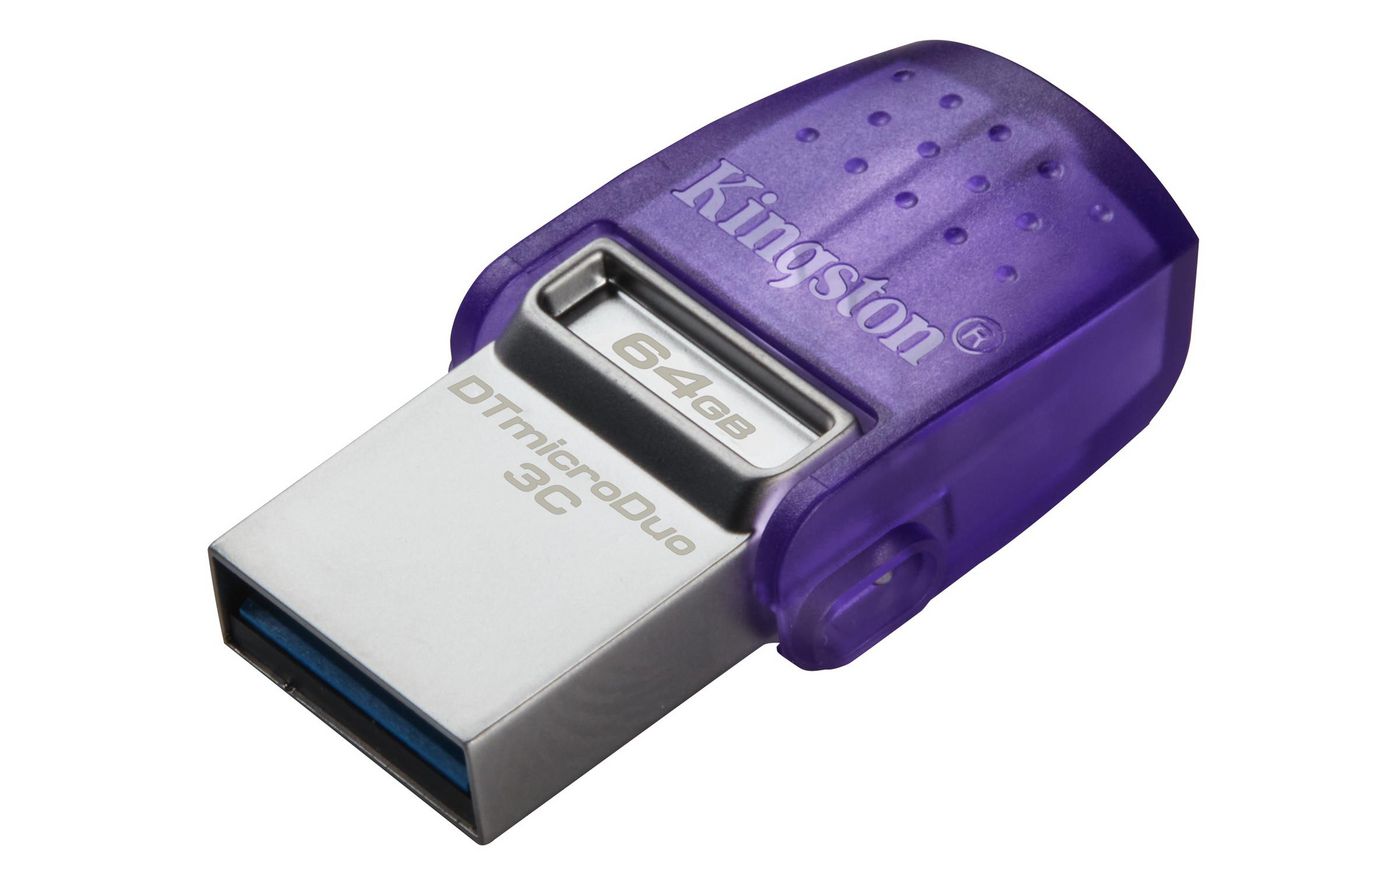 KINGSTON Stick Kingston DTMicroDuo3C 64GB USB 3.0